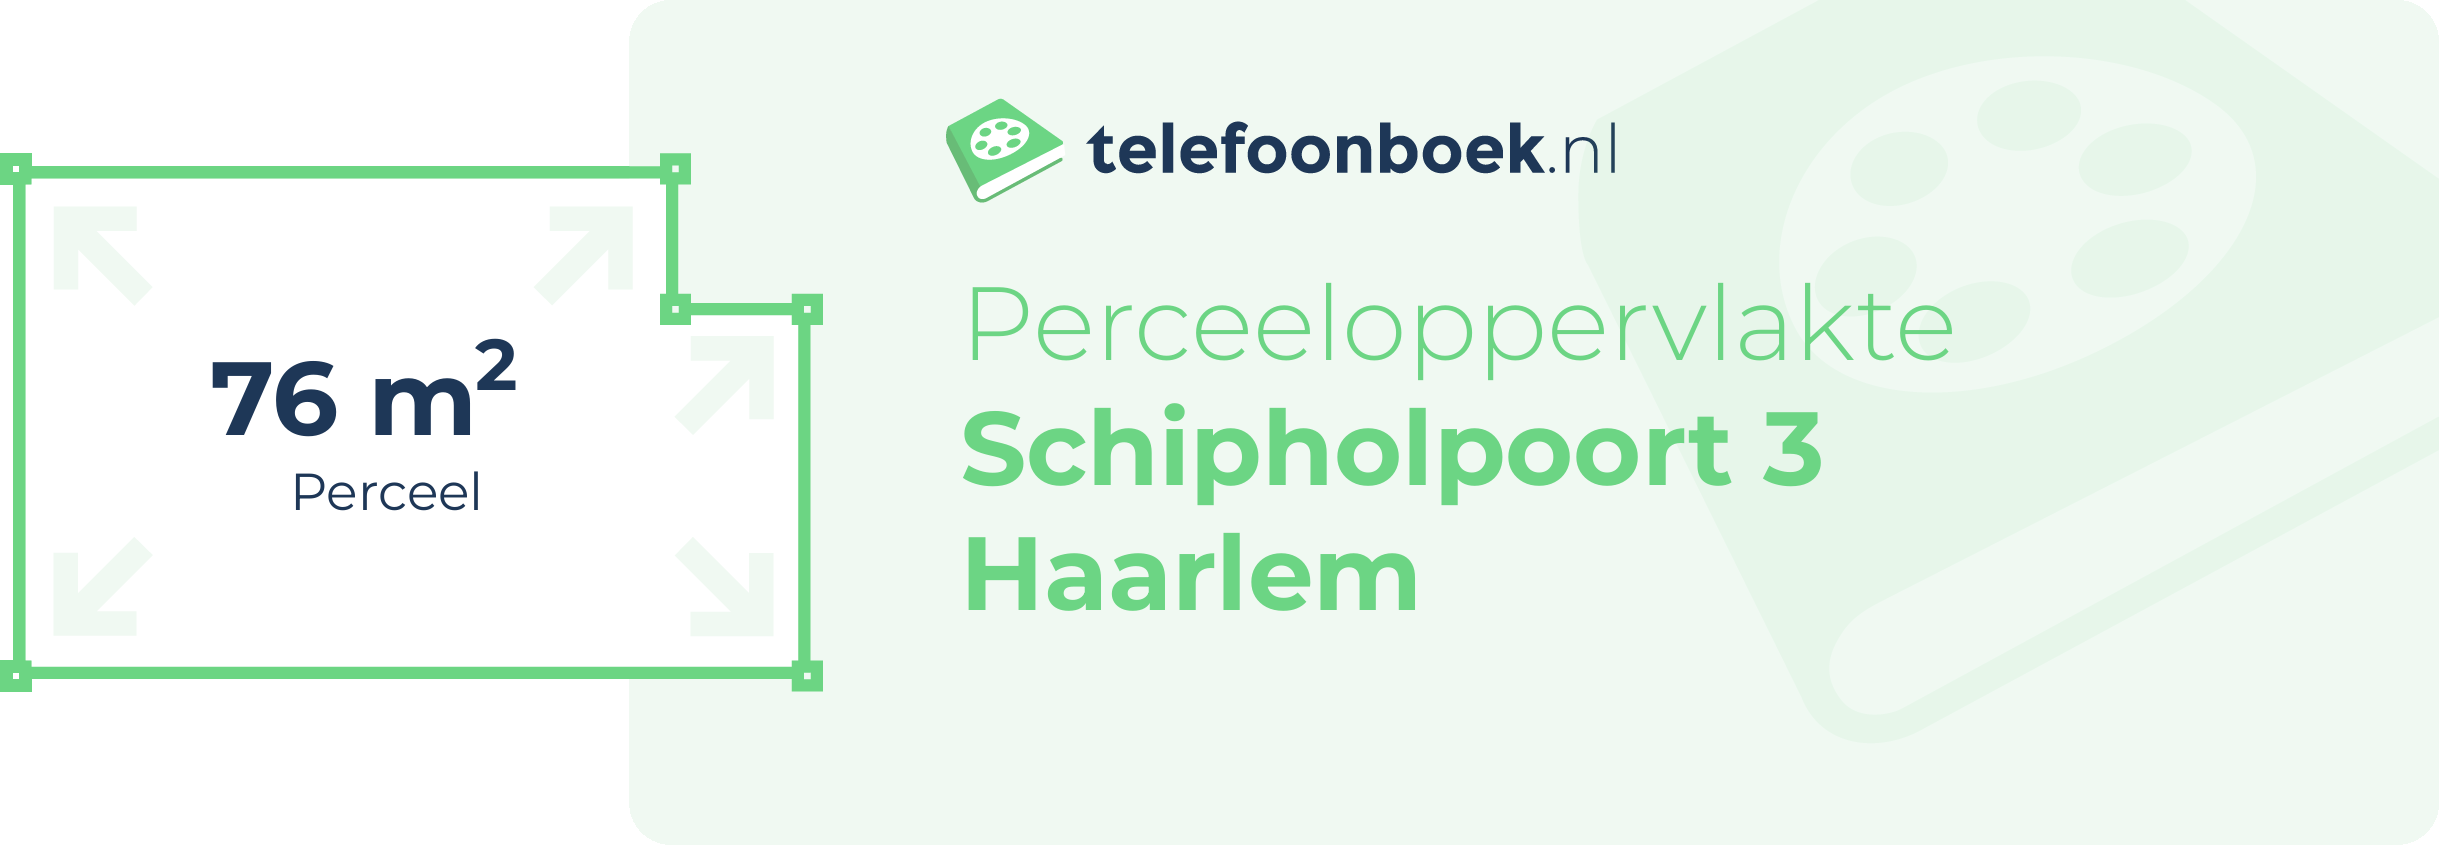 Perceeloppervlakte Schipholpoort 3 Haarlem